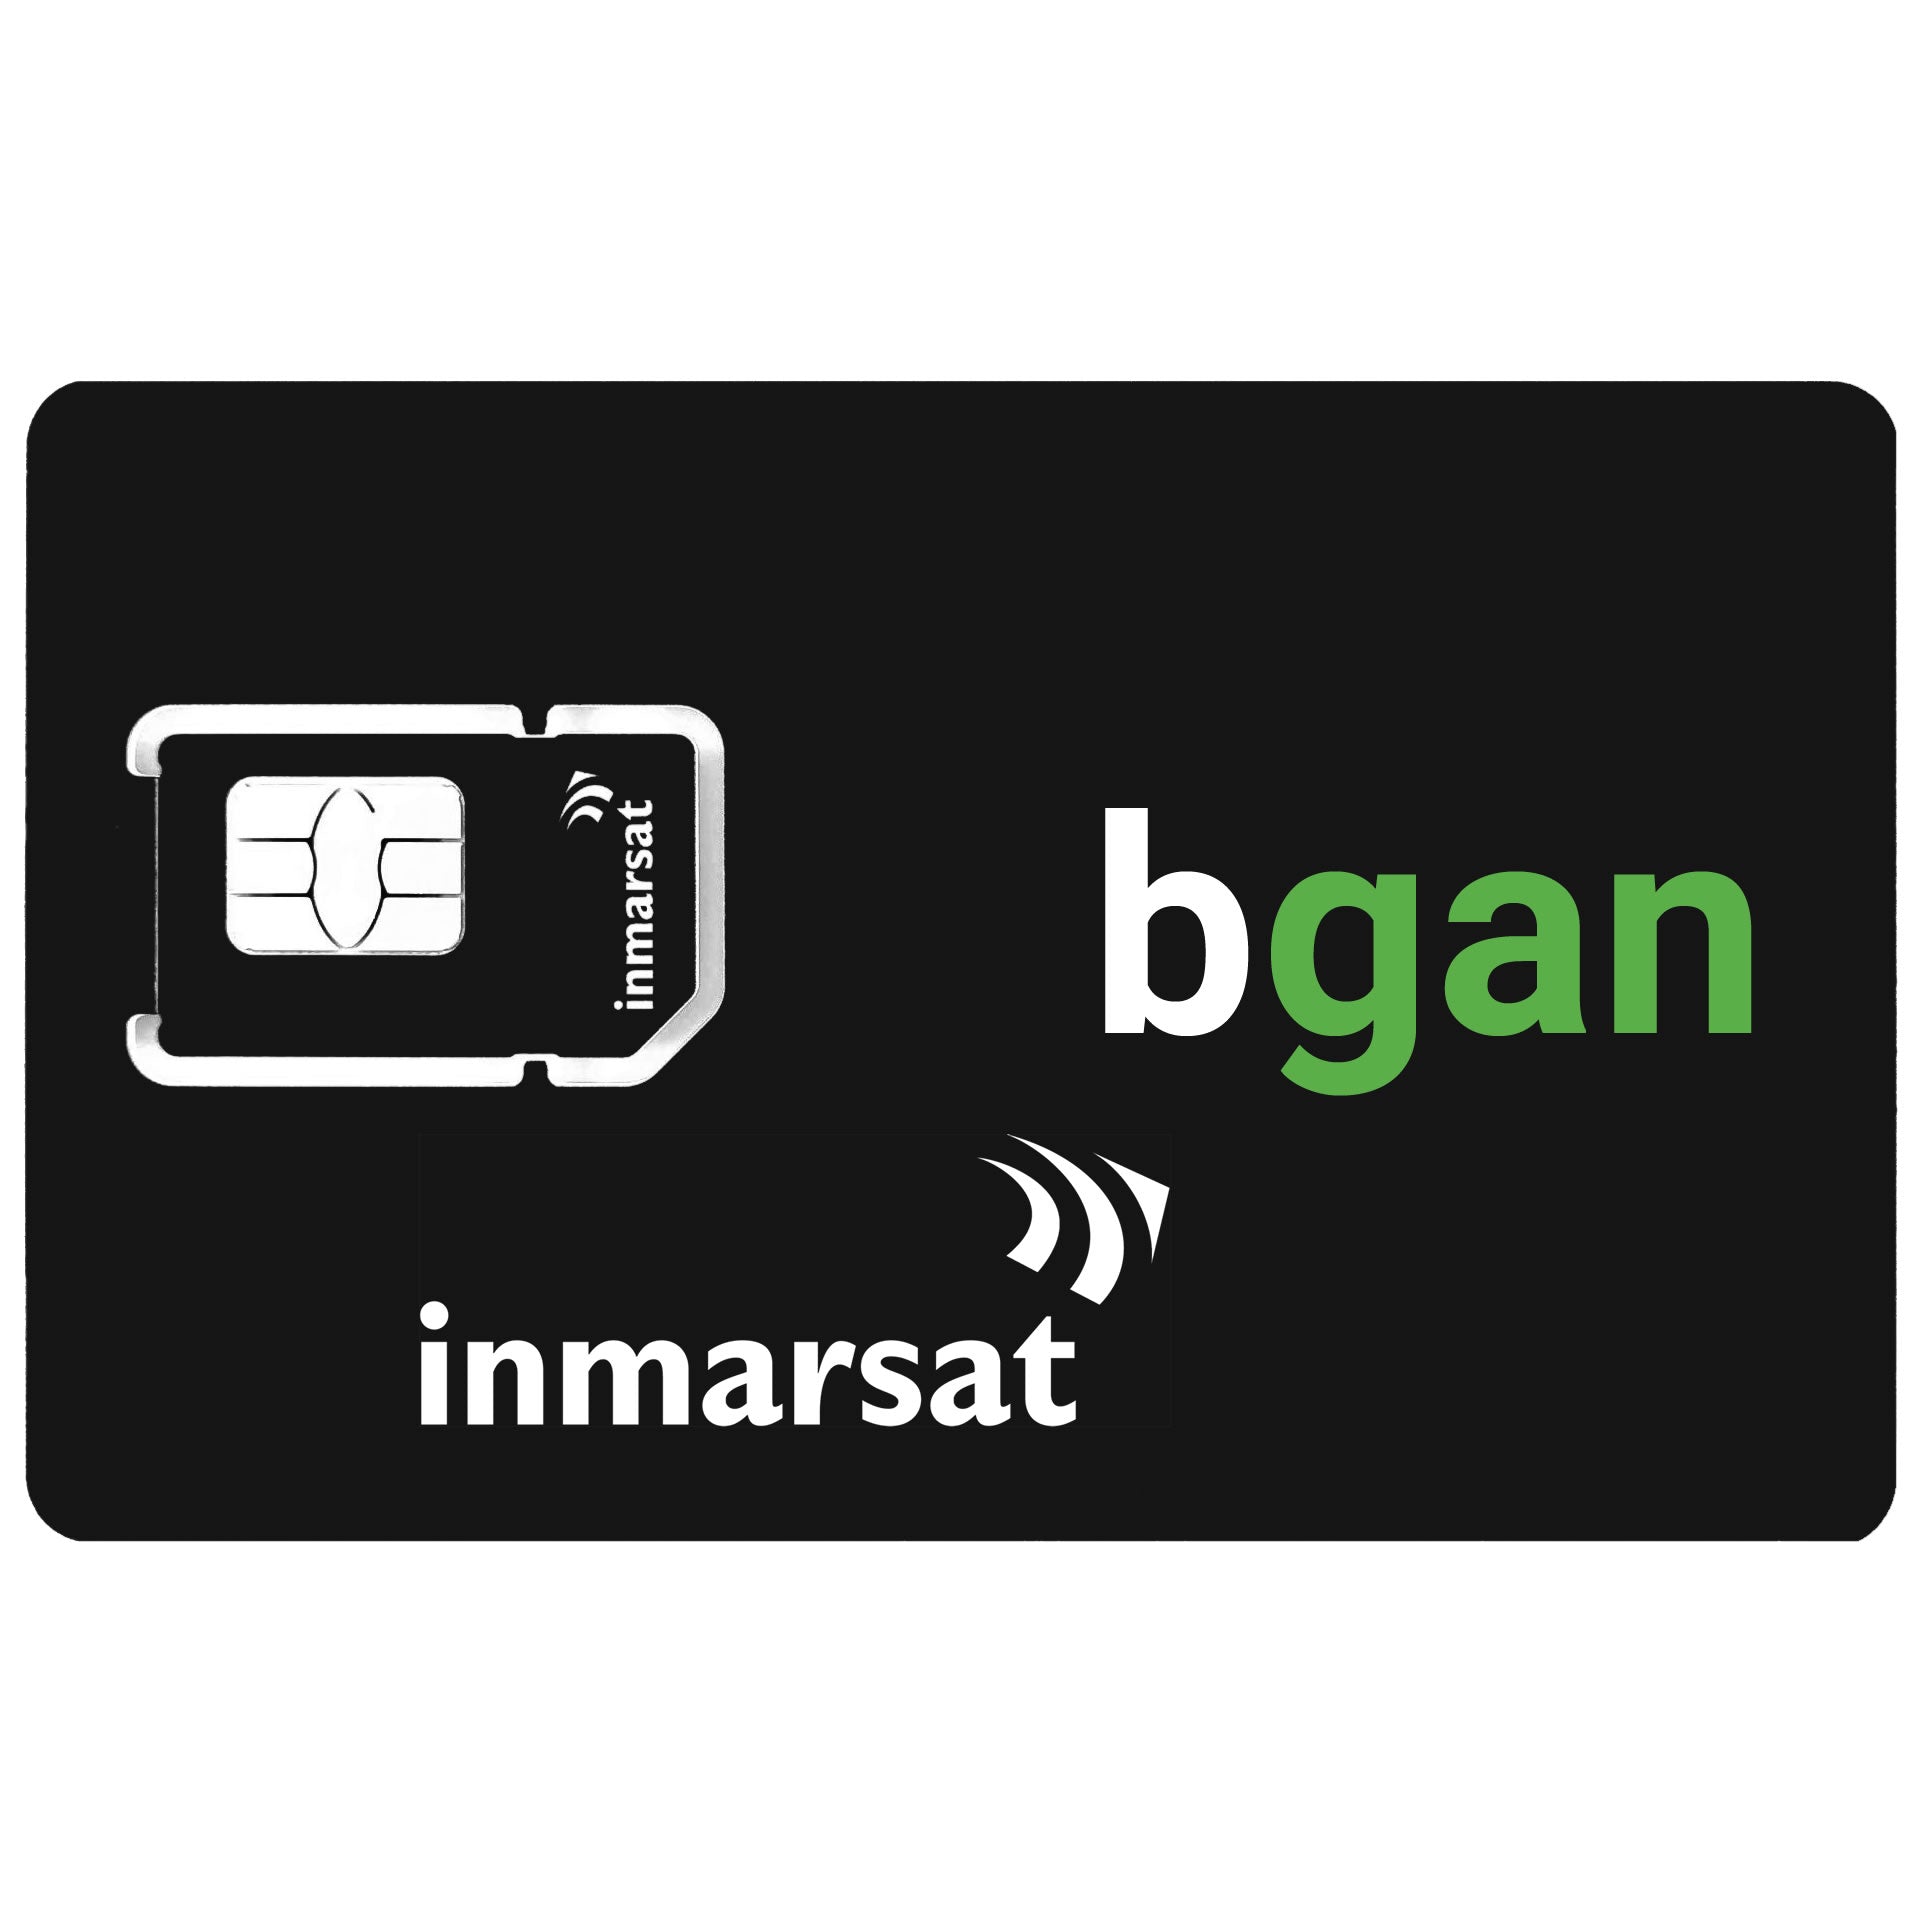 INMARSAT Rechargeable BGAN/IsatHub Prepaid Card - 500 UNITS - 180 DAYS